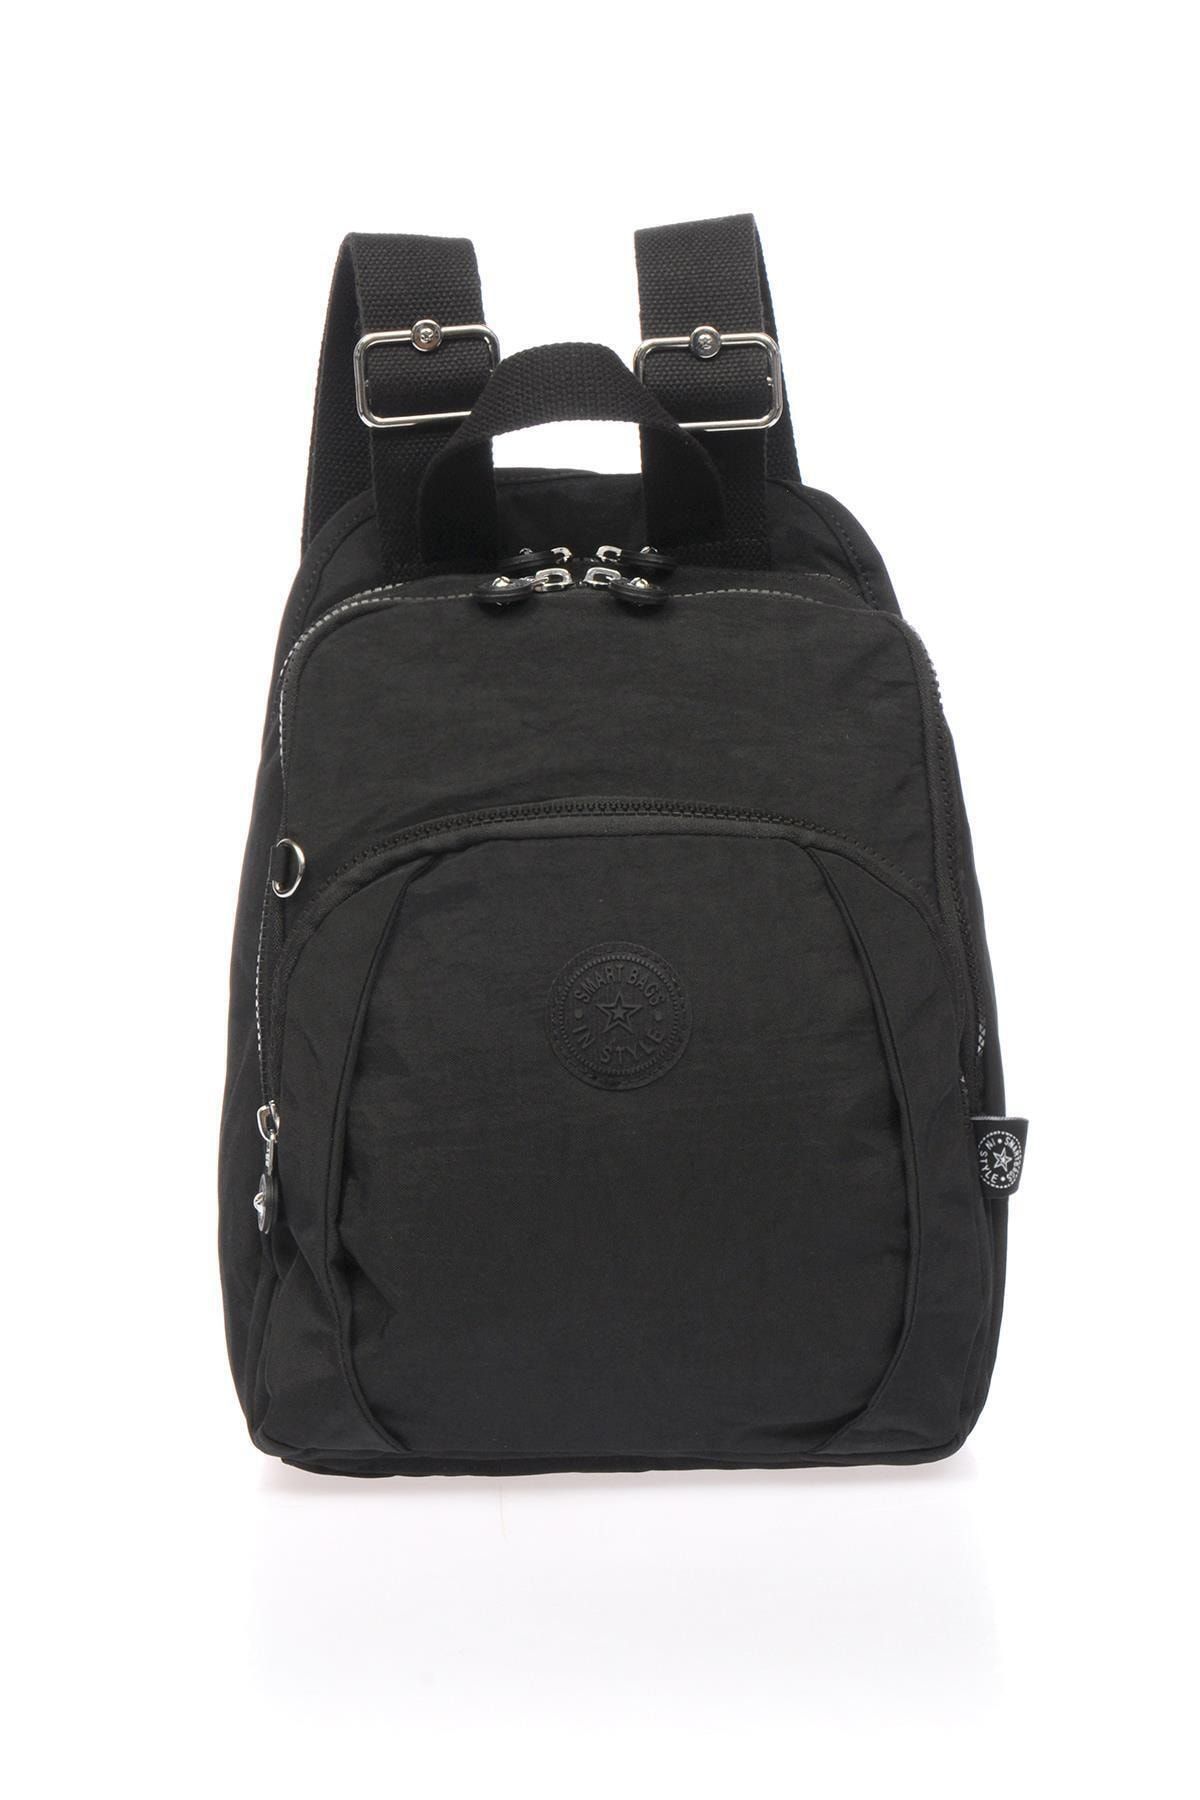 Smart Bags Smb1167-0001 Siyah Kadın Sırt Çantası